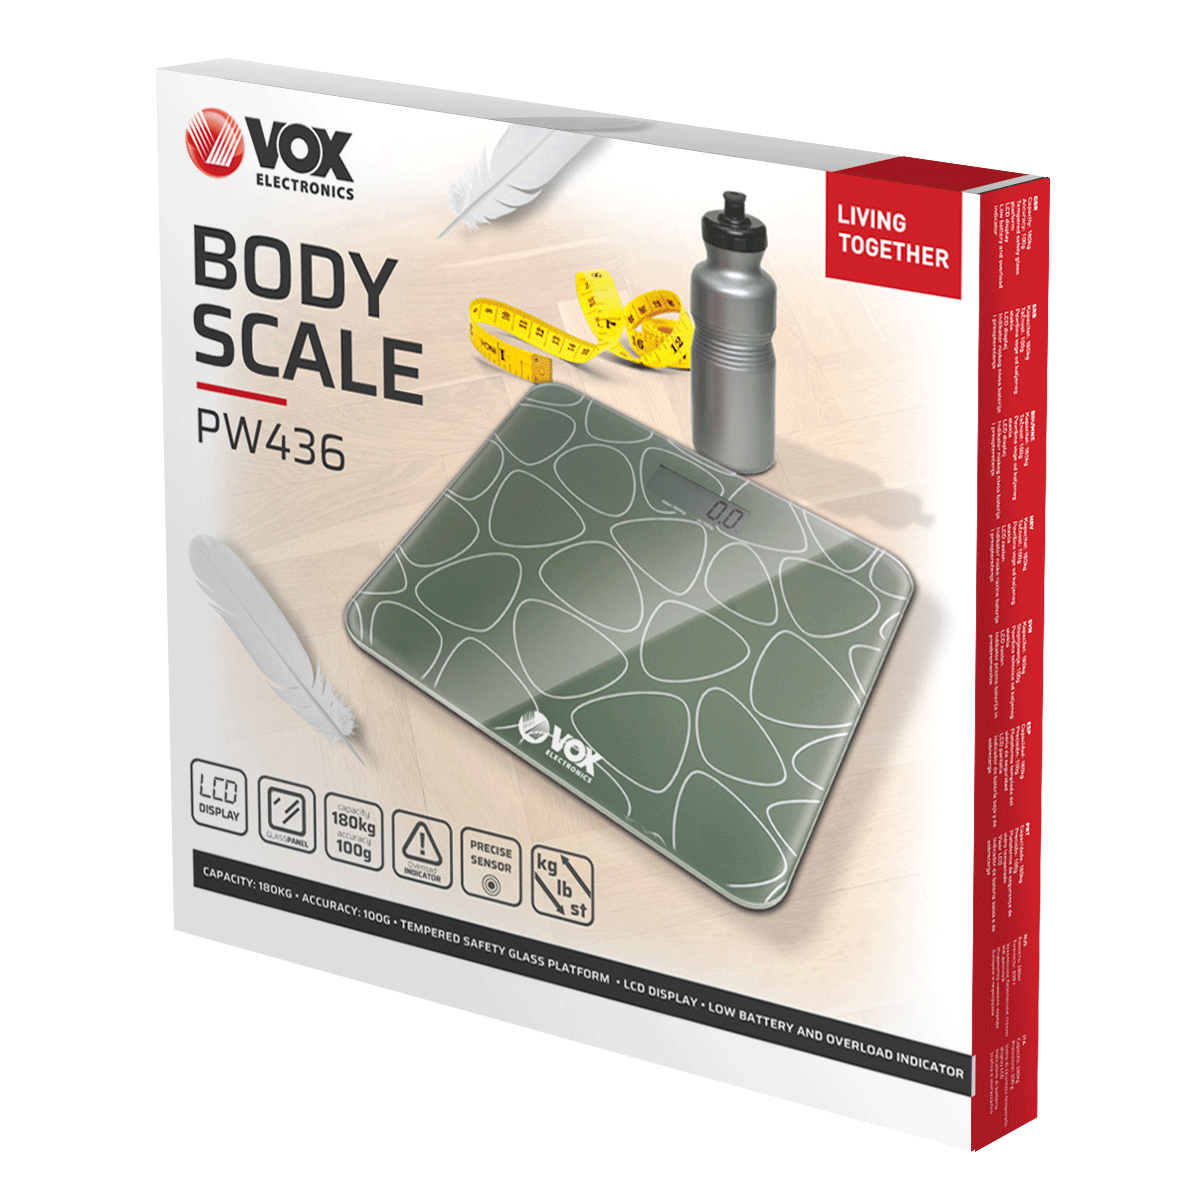 Body scale PW 436 